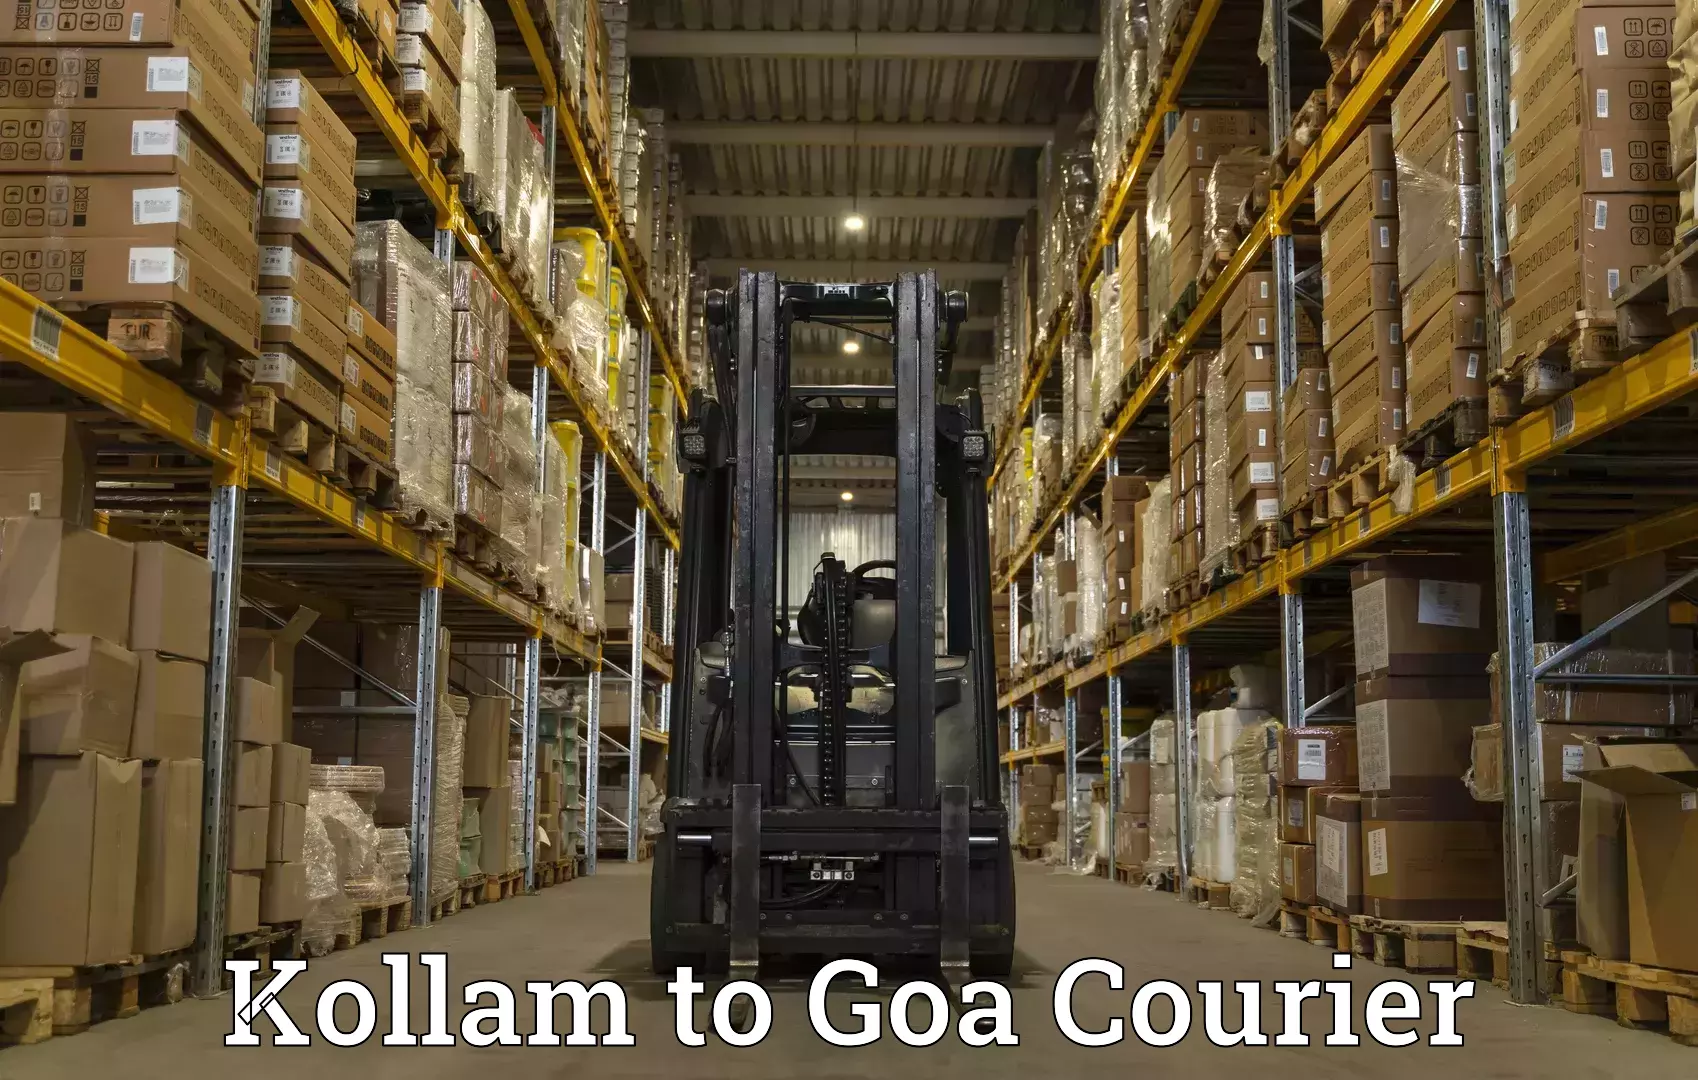 Local delivery service Kollam to Goa